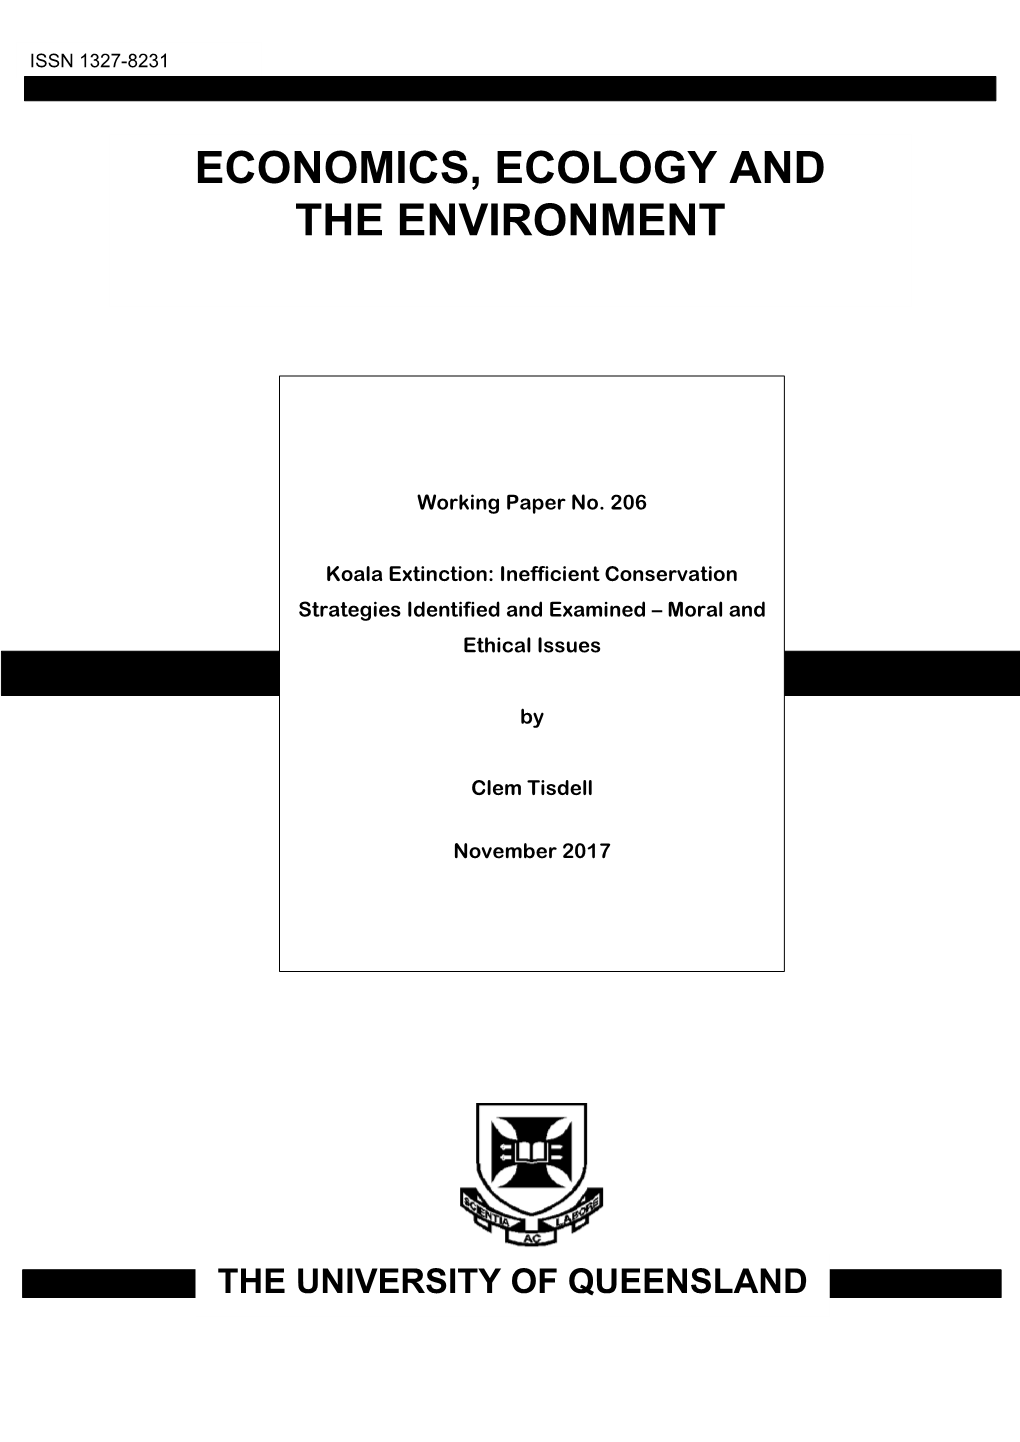 Economics, Ecology and the Environment